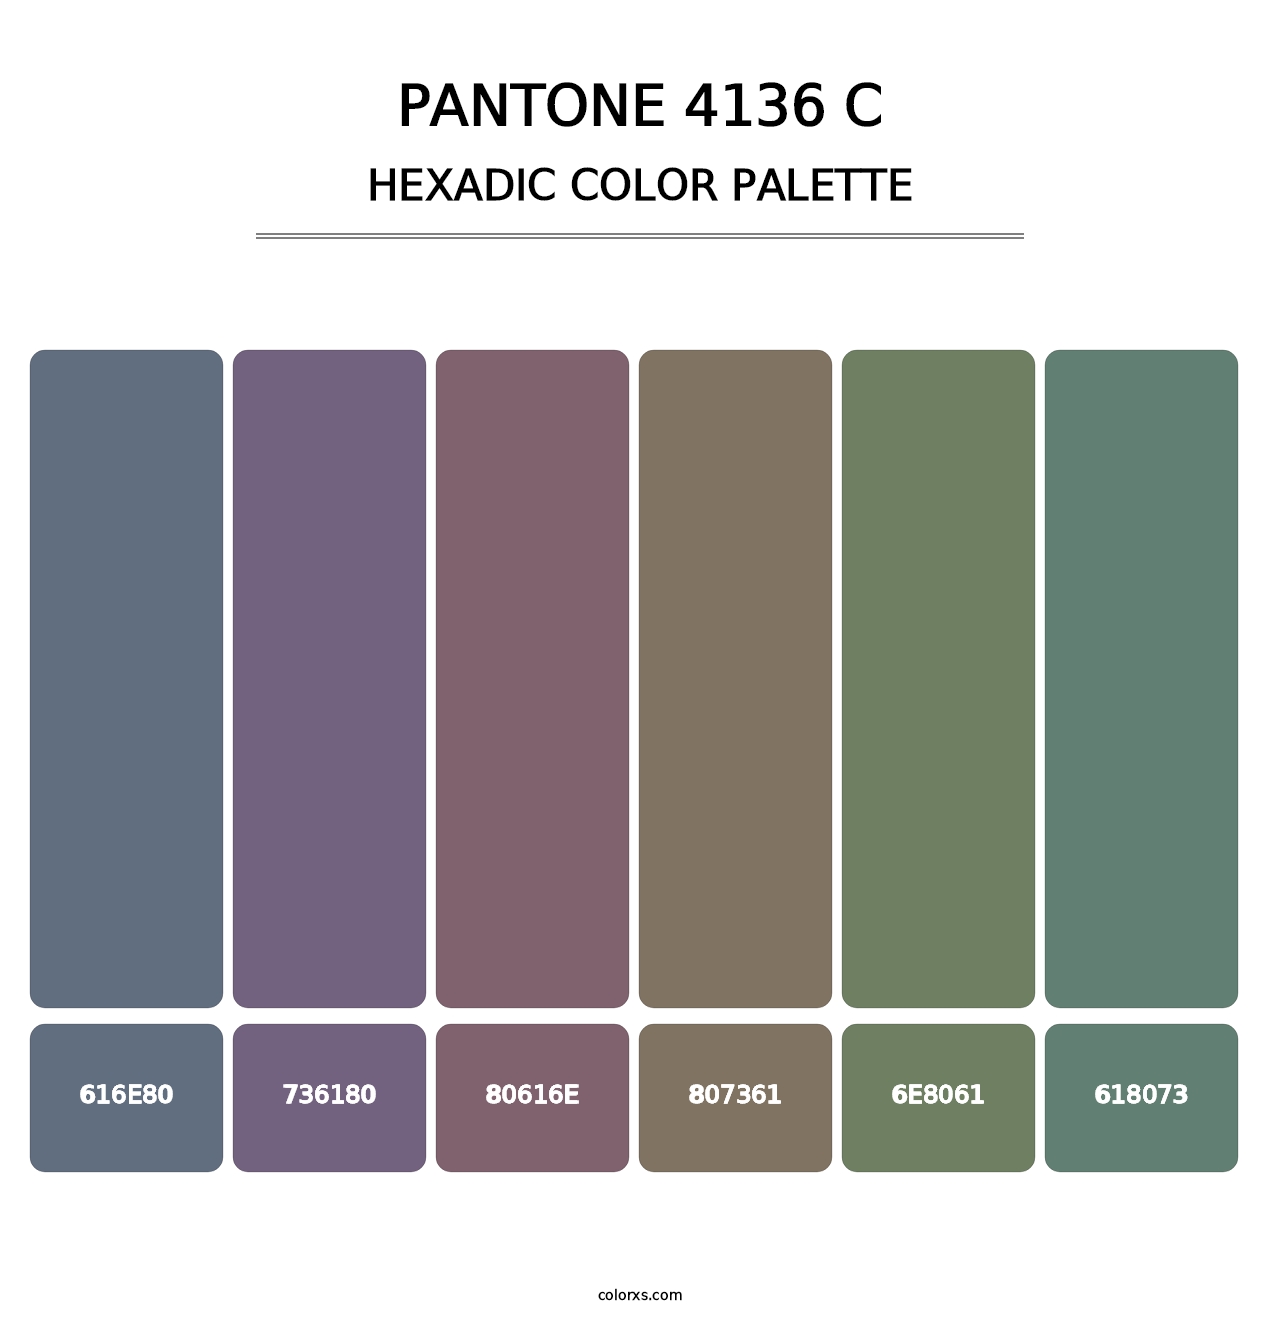 PANTONE 4136 C - Hexadic Color Palette